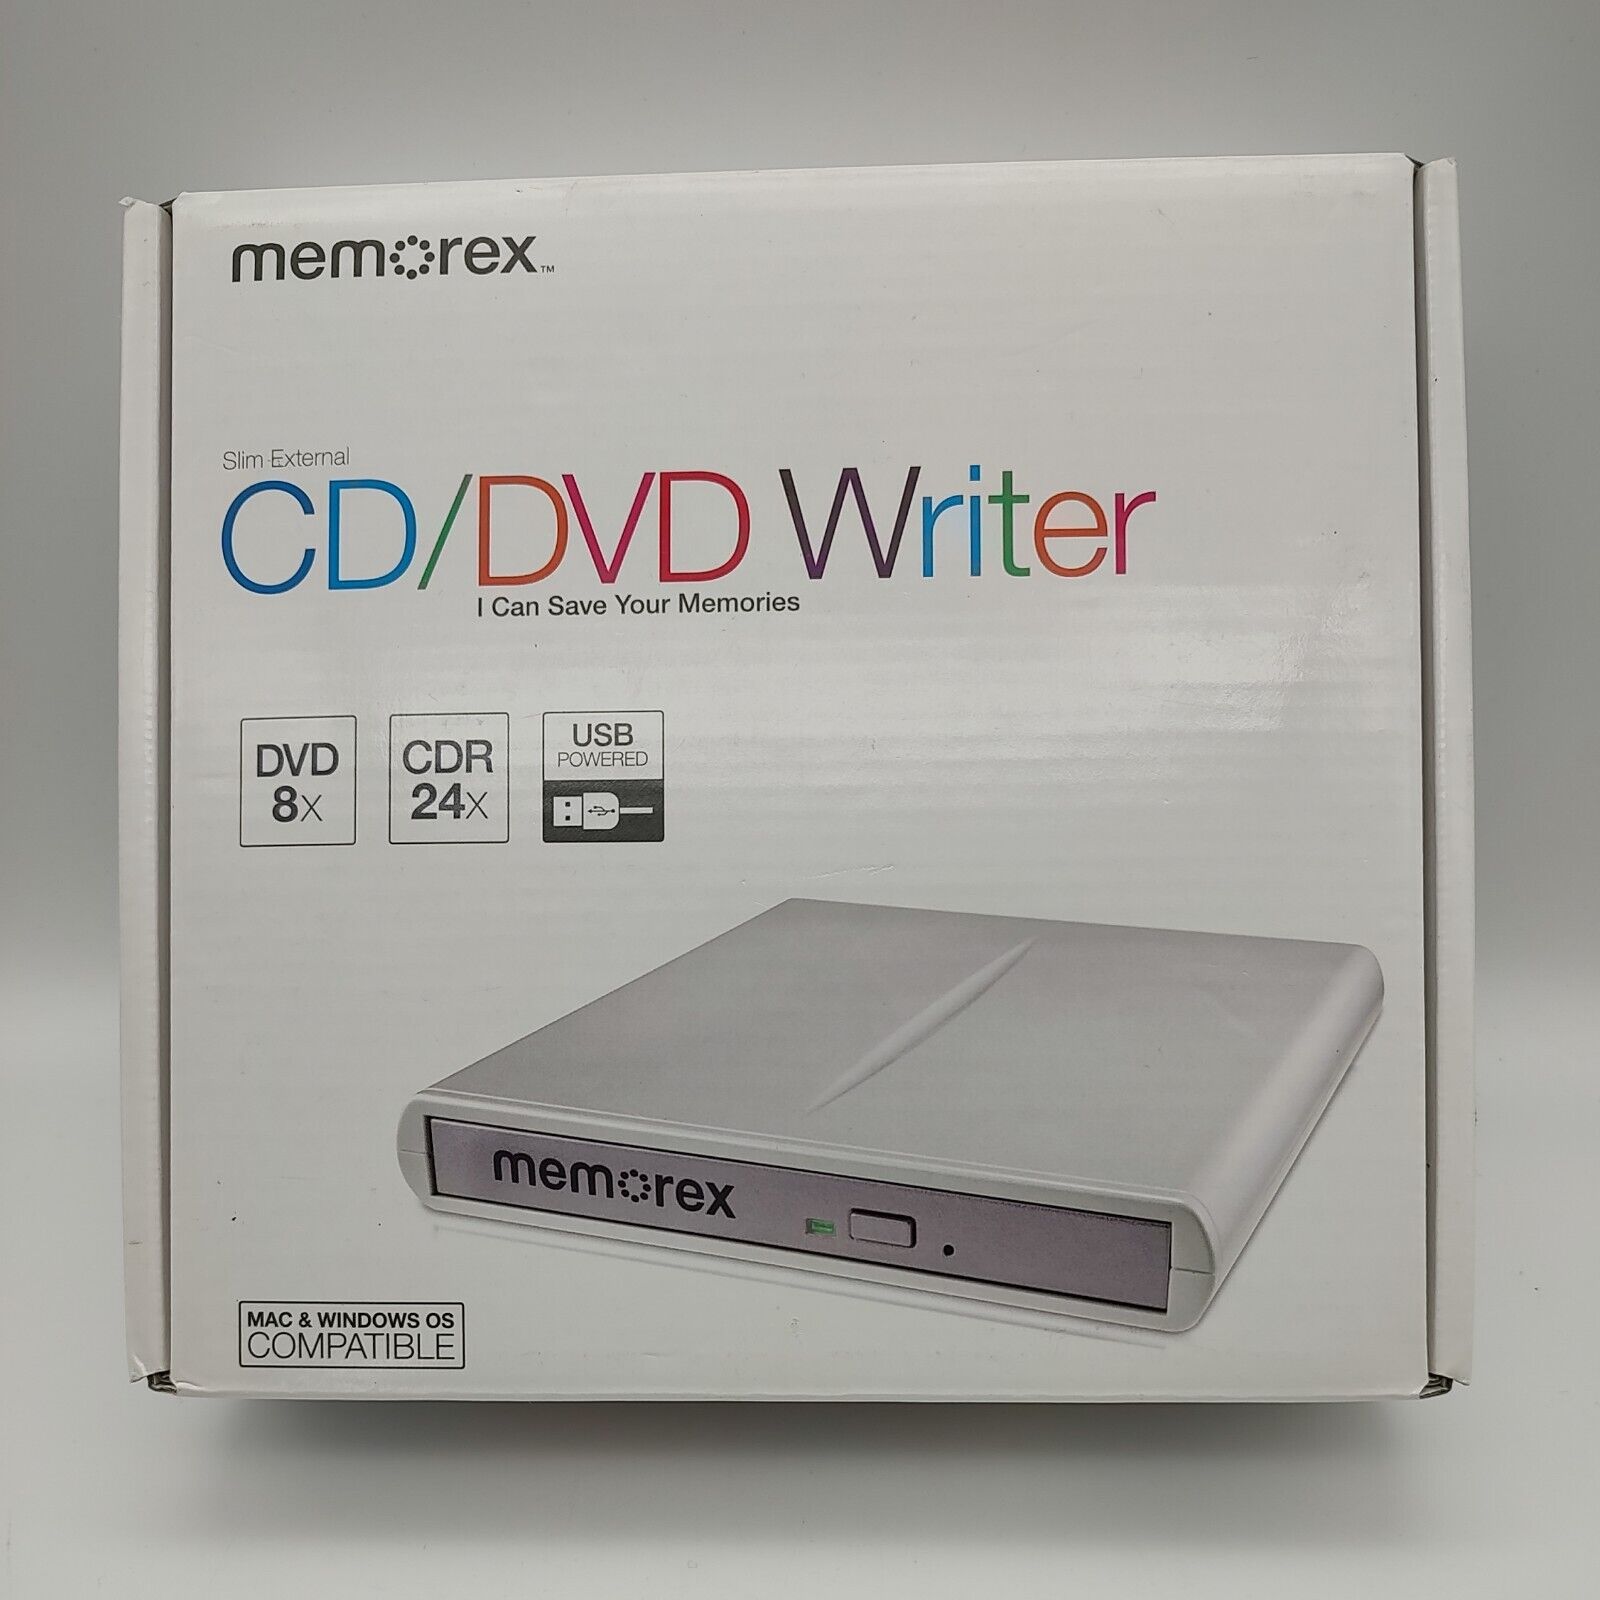 MEMOREX CD/DVD Writer Burner - Slim External DVD 8x CDR 24x USB Powered Open Box